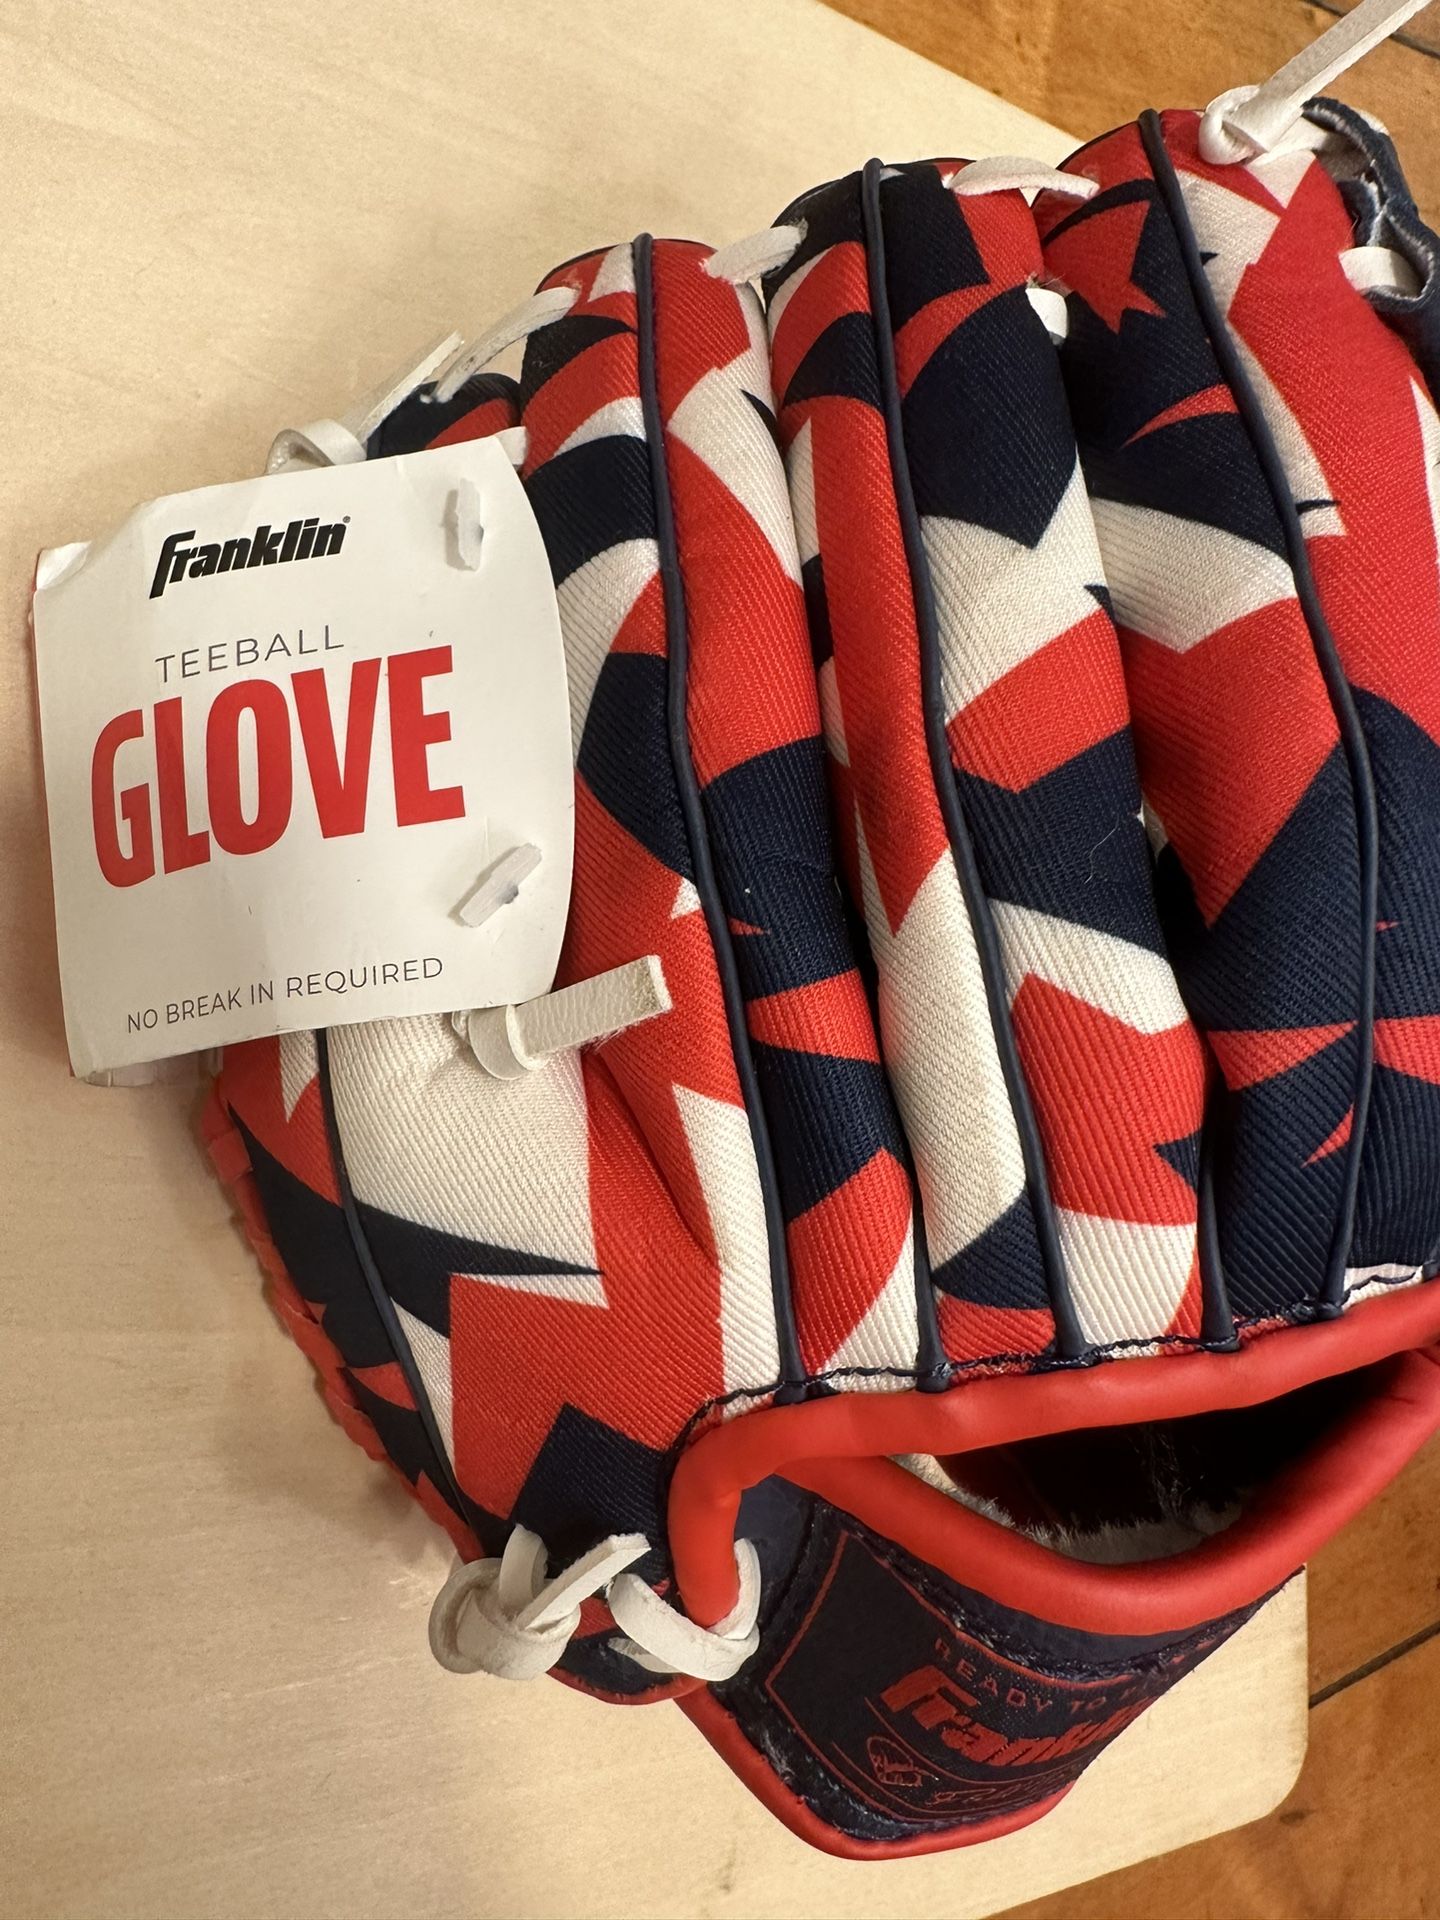 Franklin Tee Ball Glove 